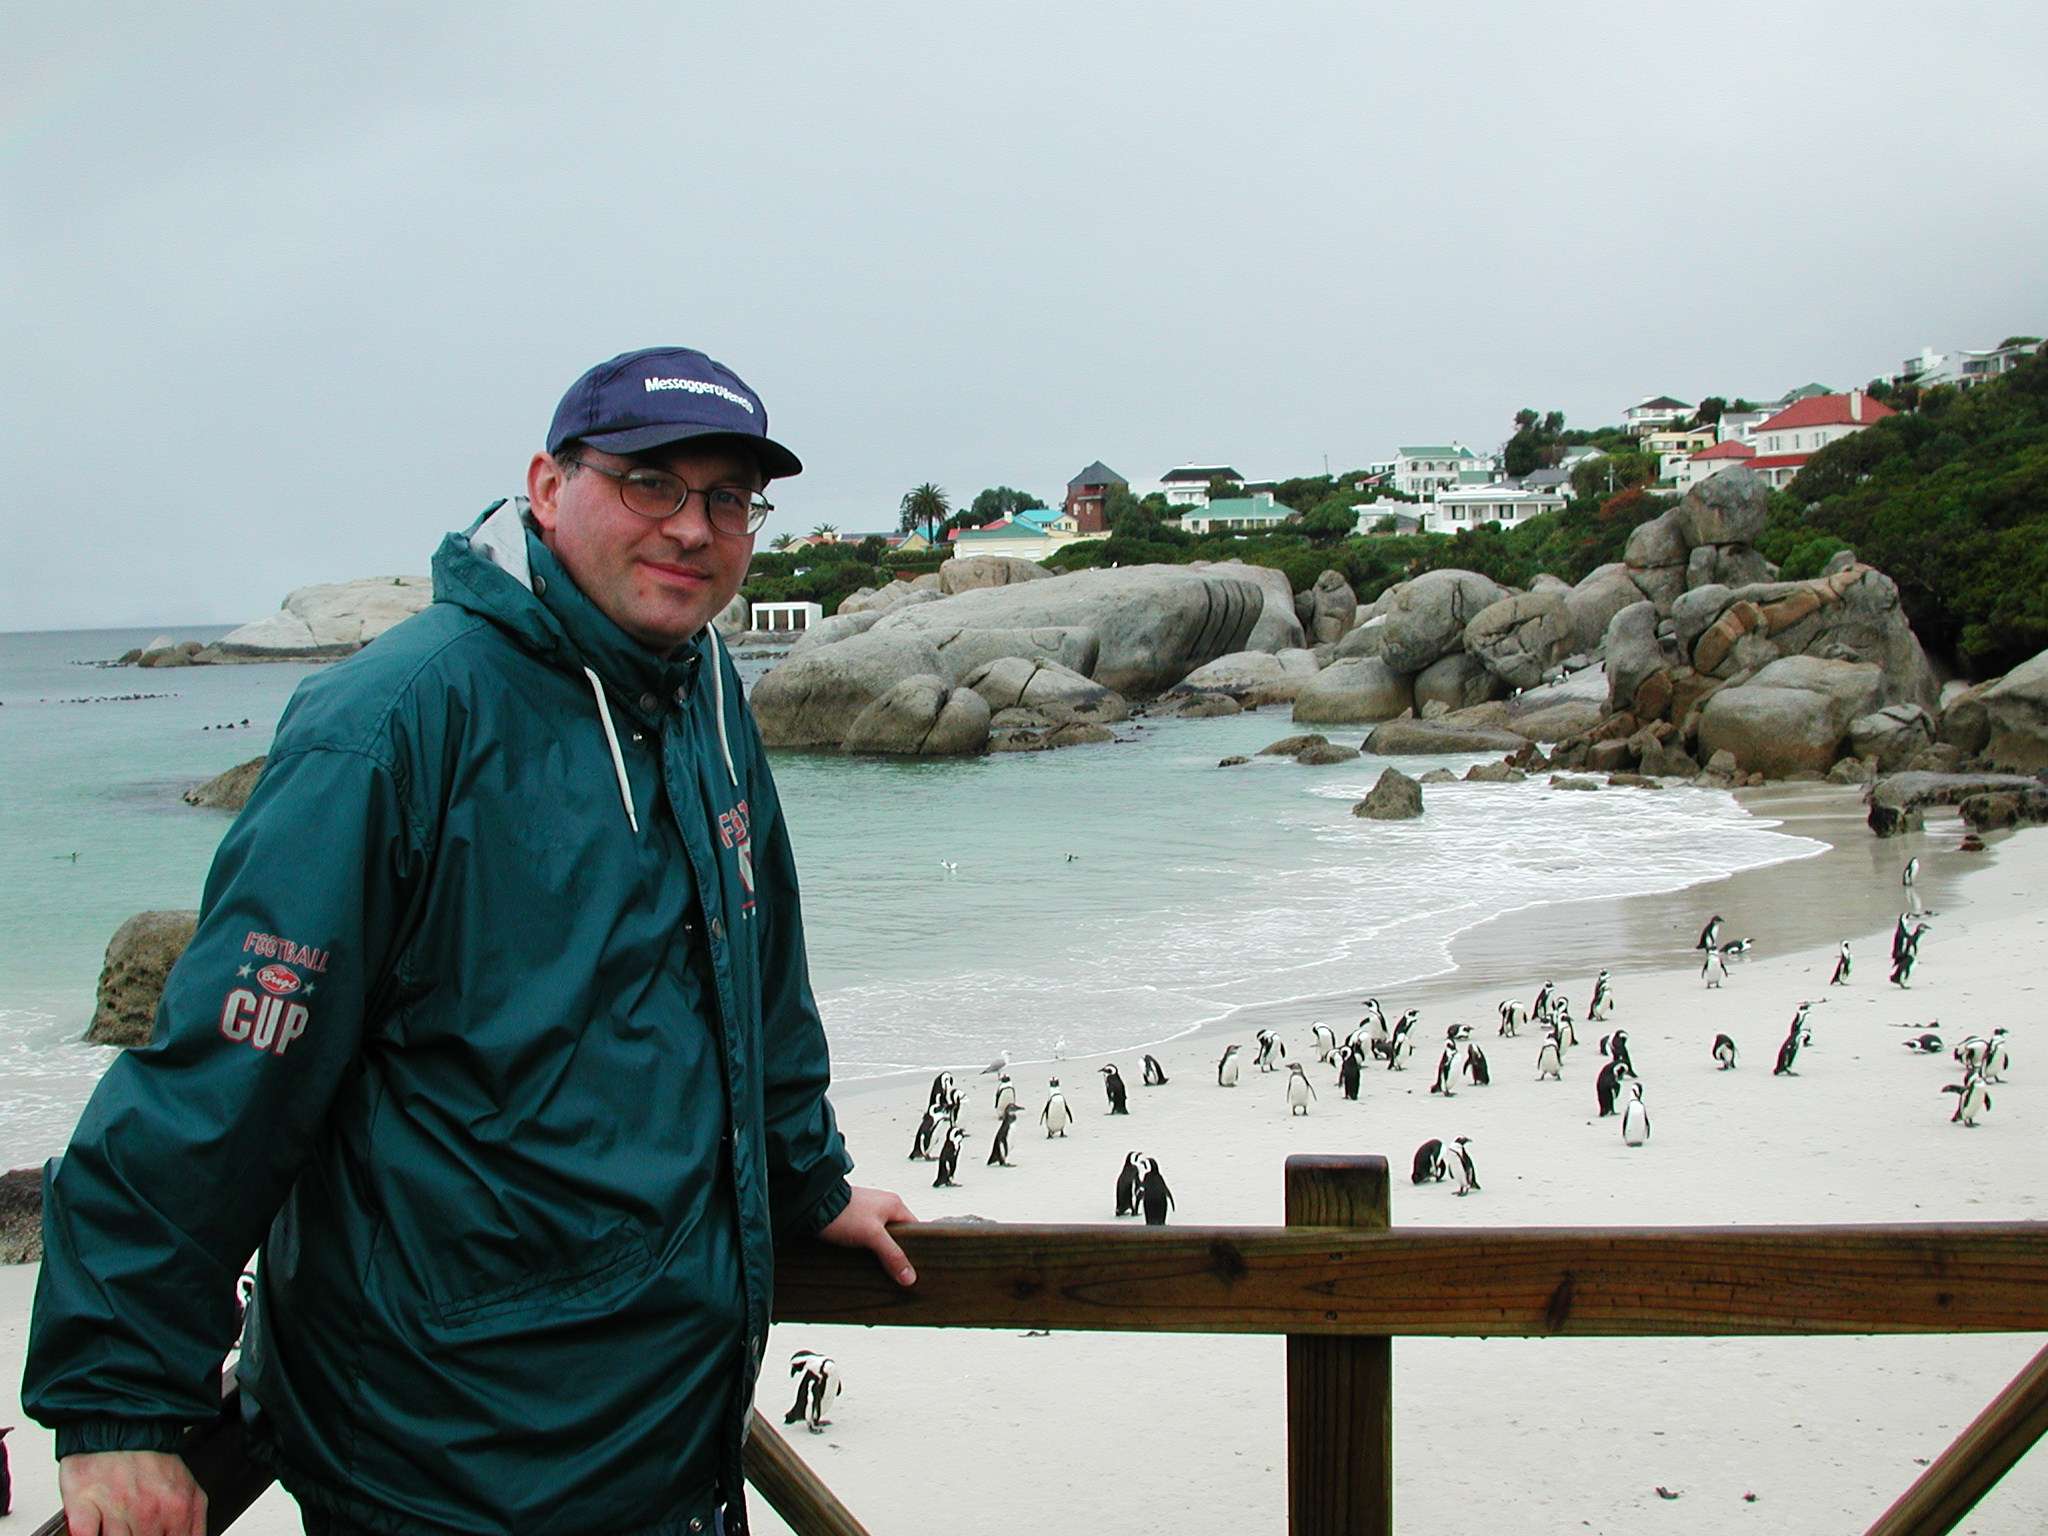 2) Lucio Furlanetto tra i pinguini: 229 KB; clicca l'immagine per ingrandirla